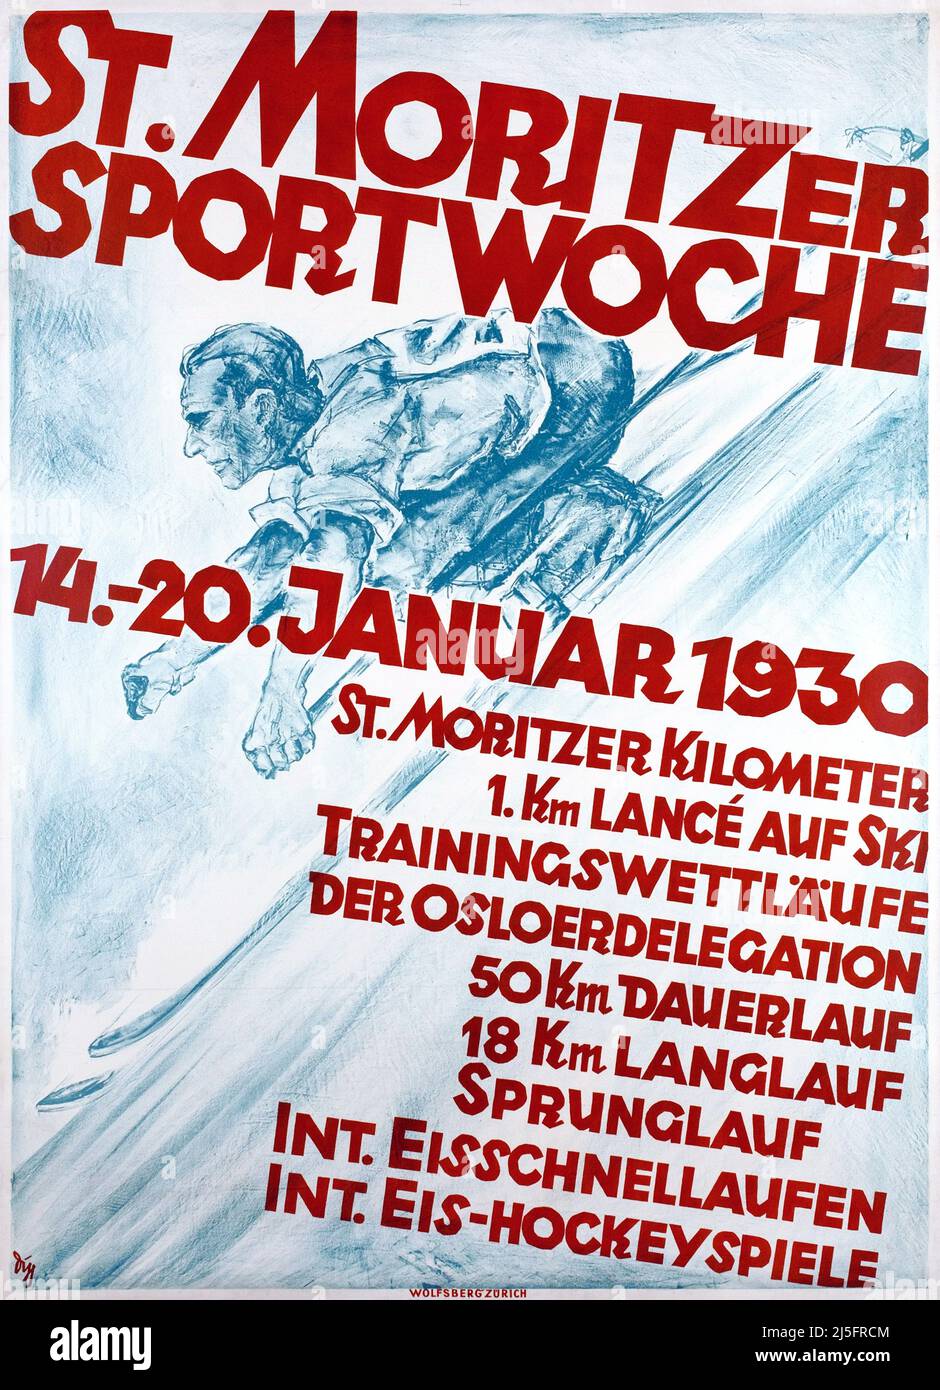 VINTAGE 1930s POSTER St.Moritzer Sportwoche Alex Walter DIGGELMANN 1930 Stock Photo